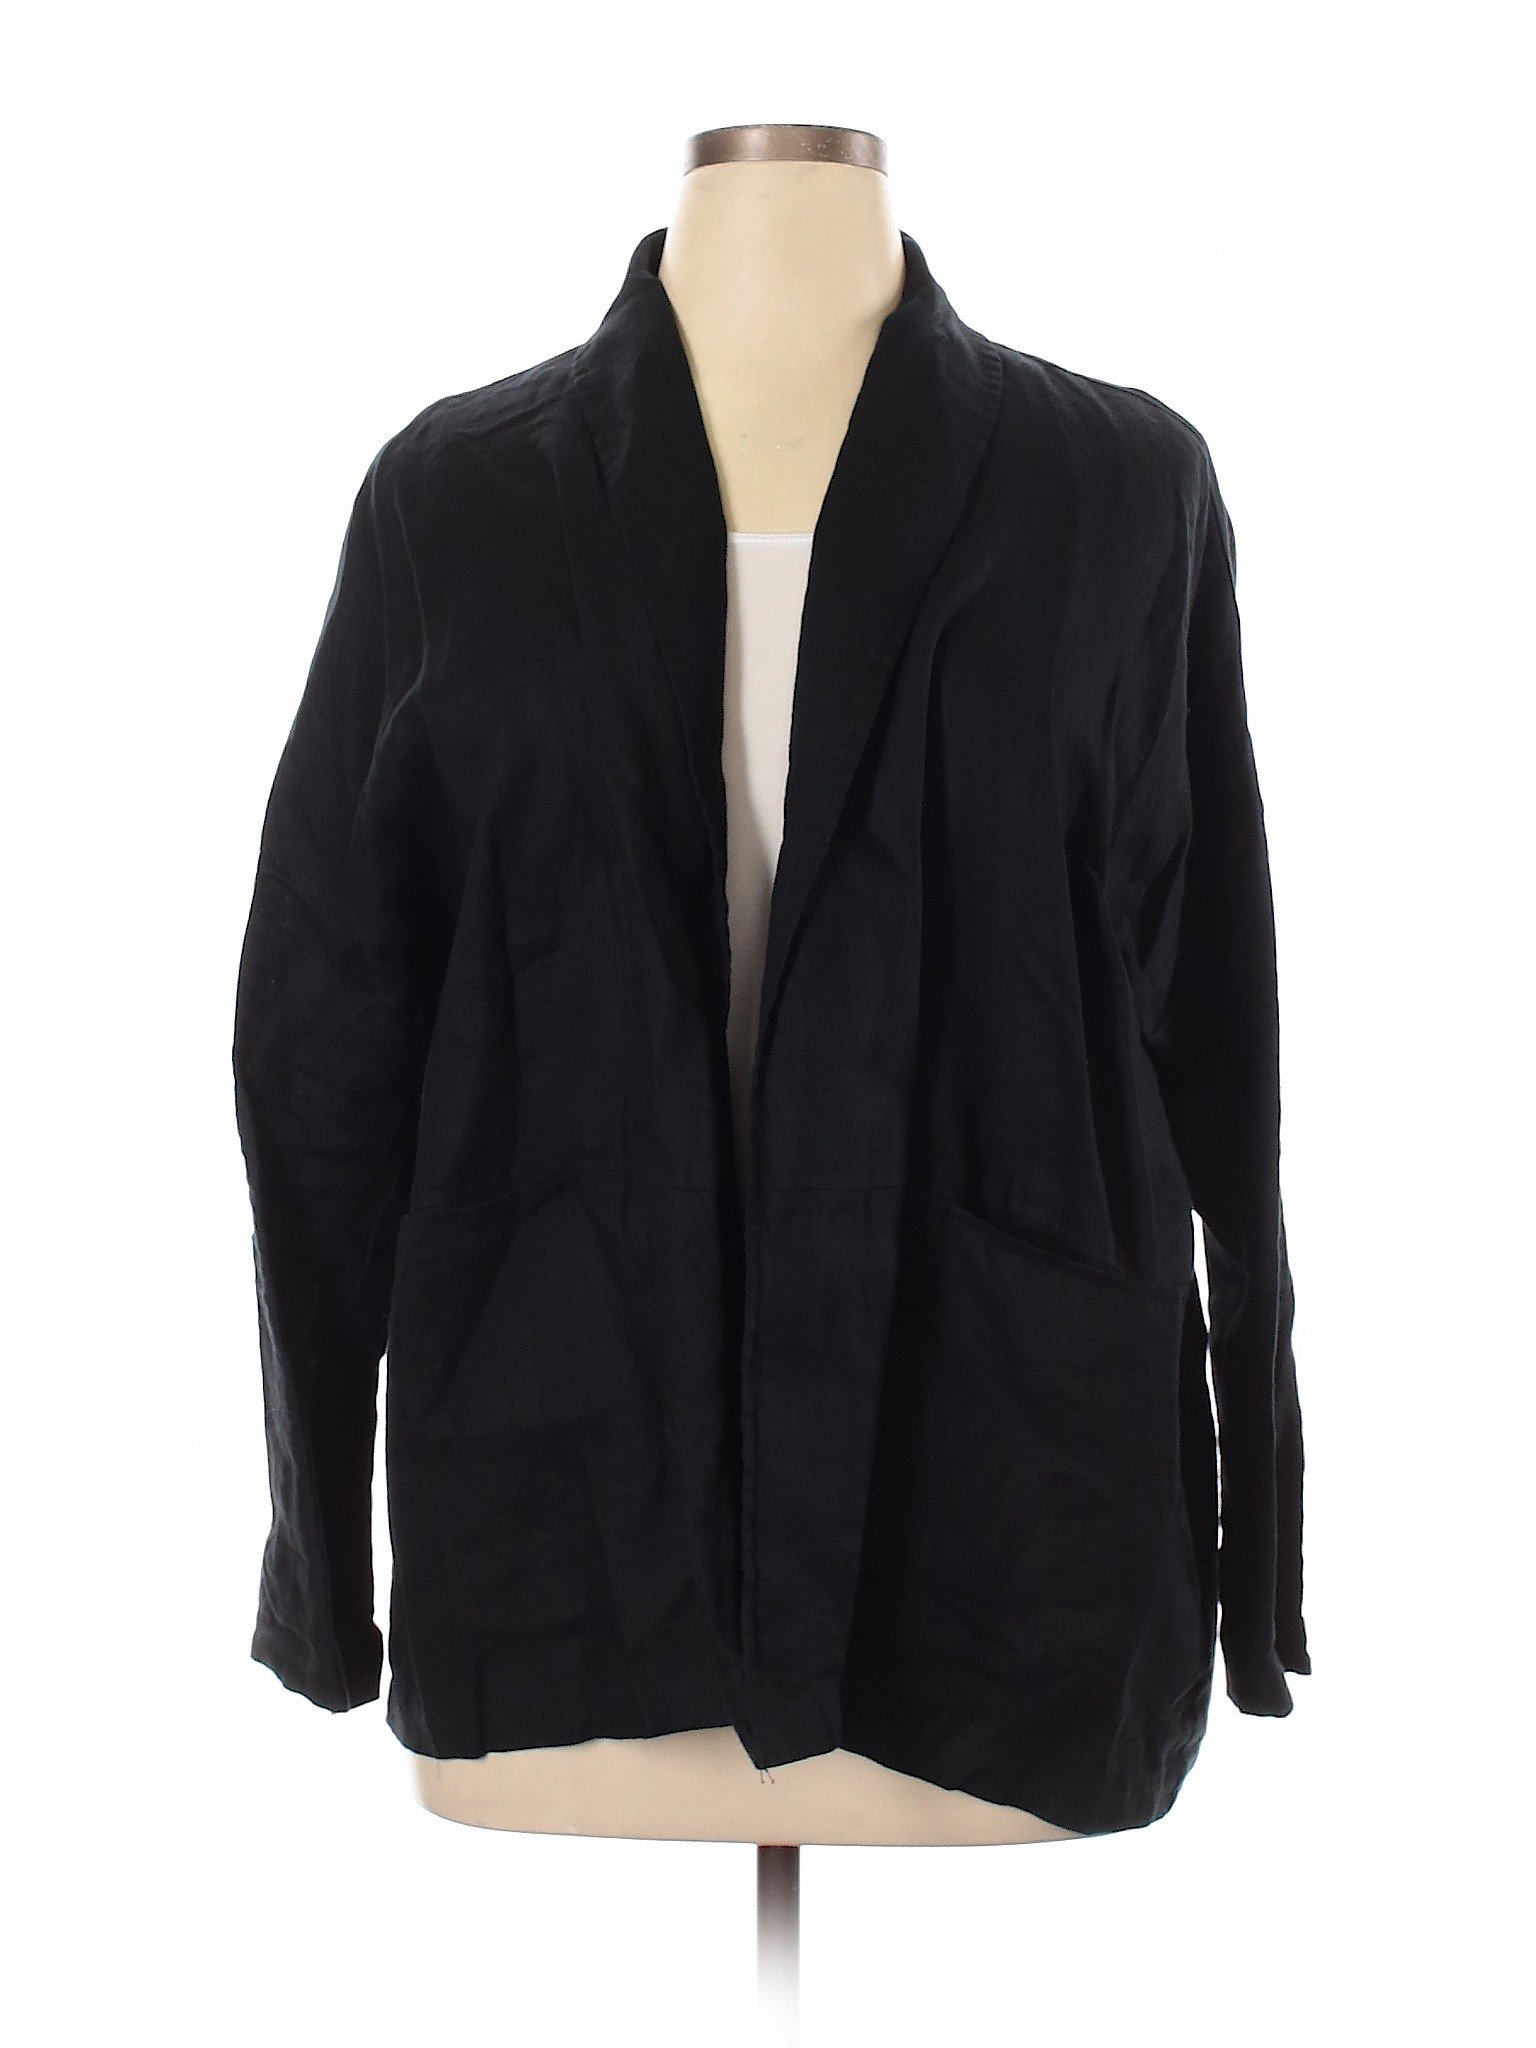 Adrienne Vittadini Women Black Jacket L | eBay